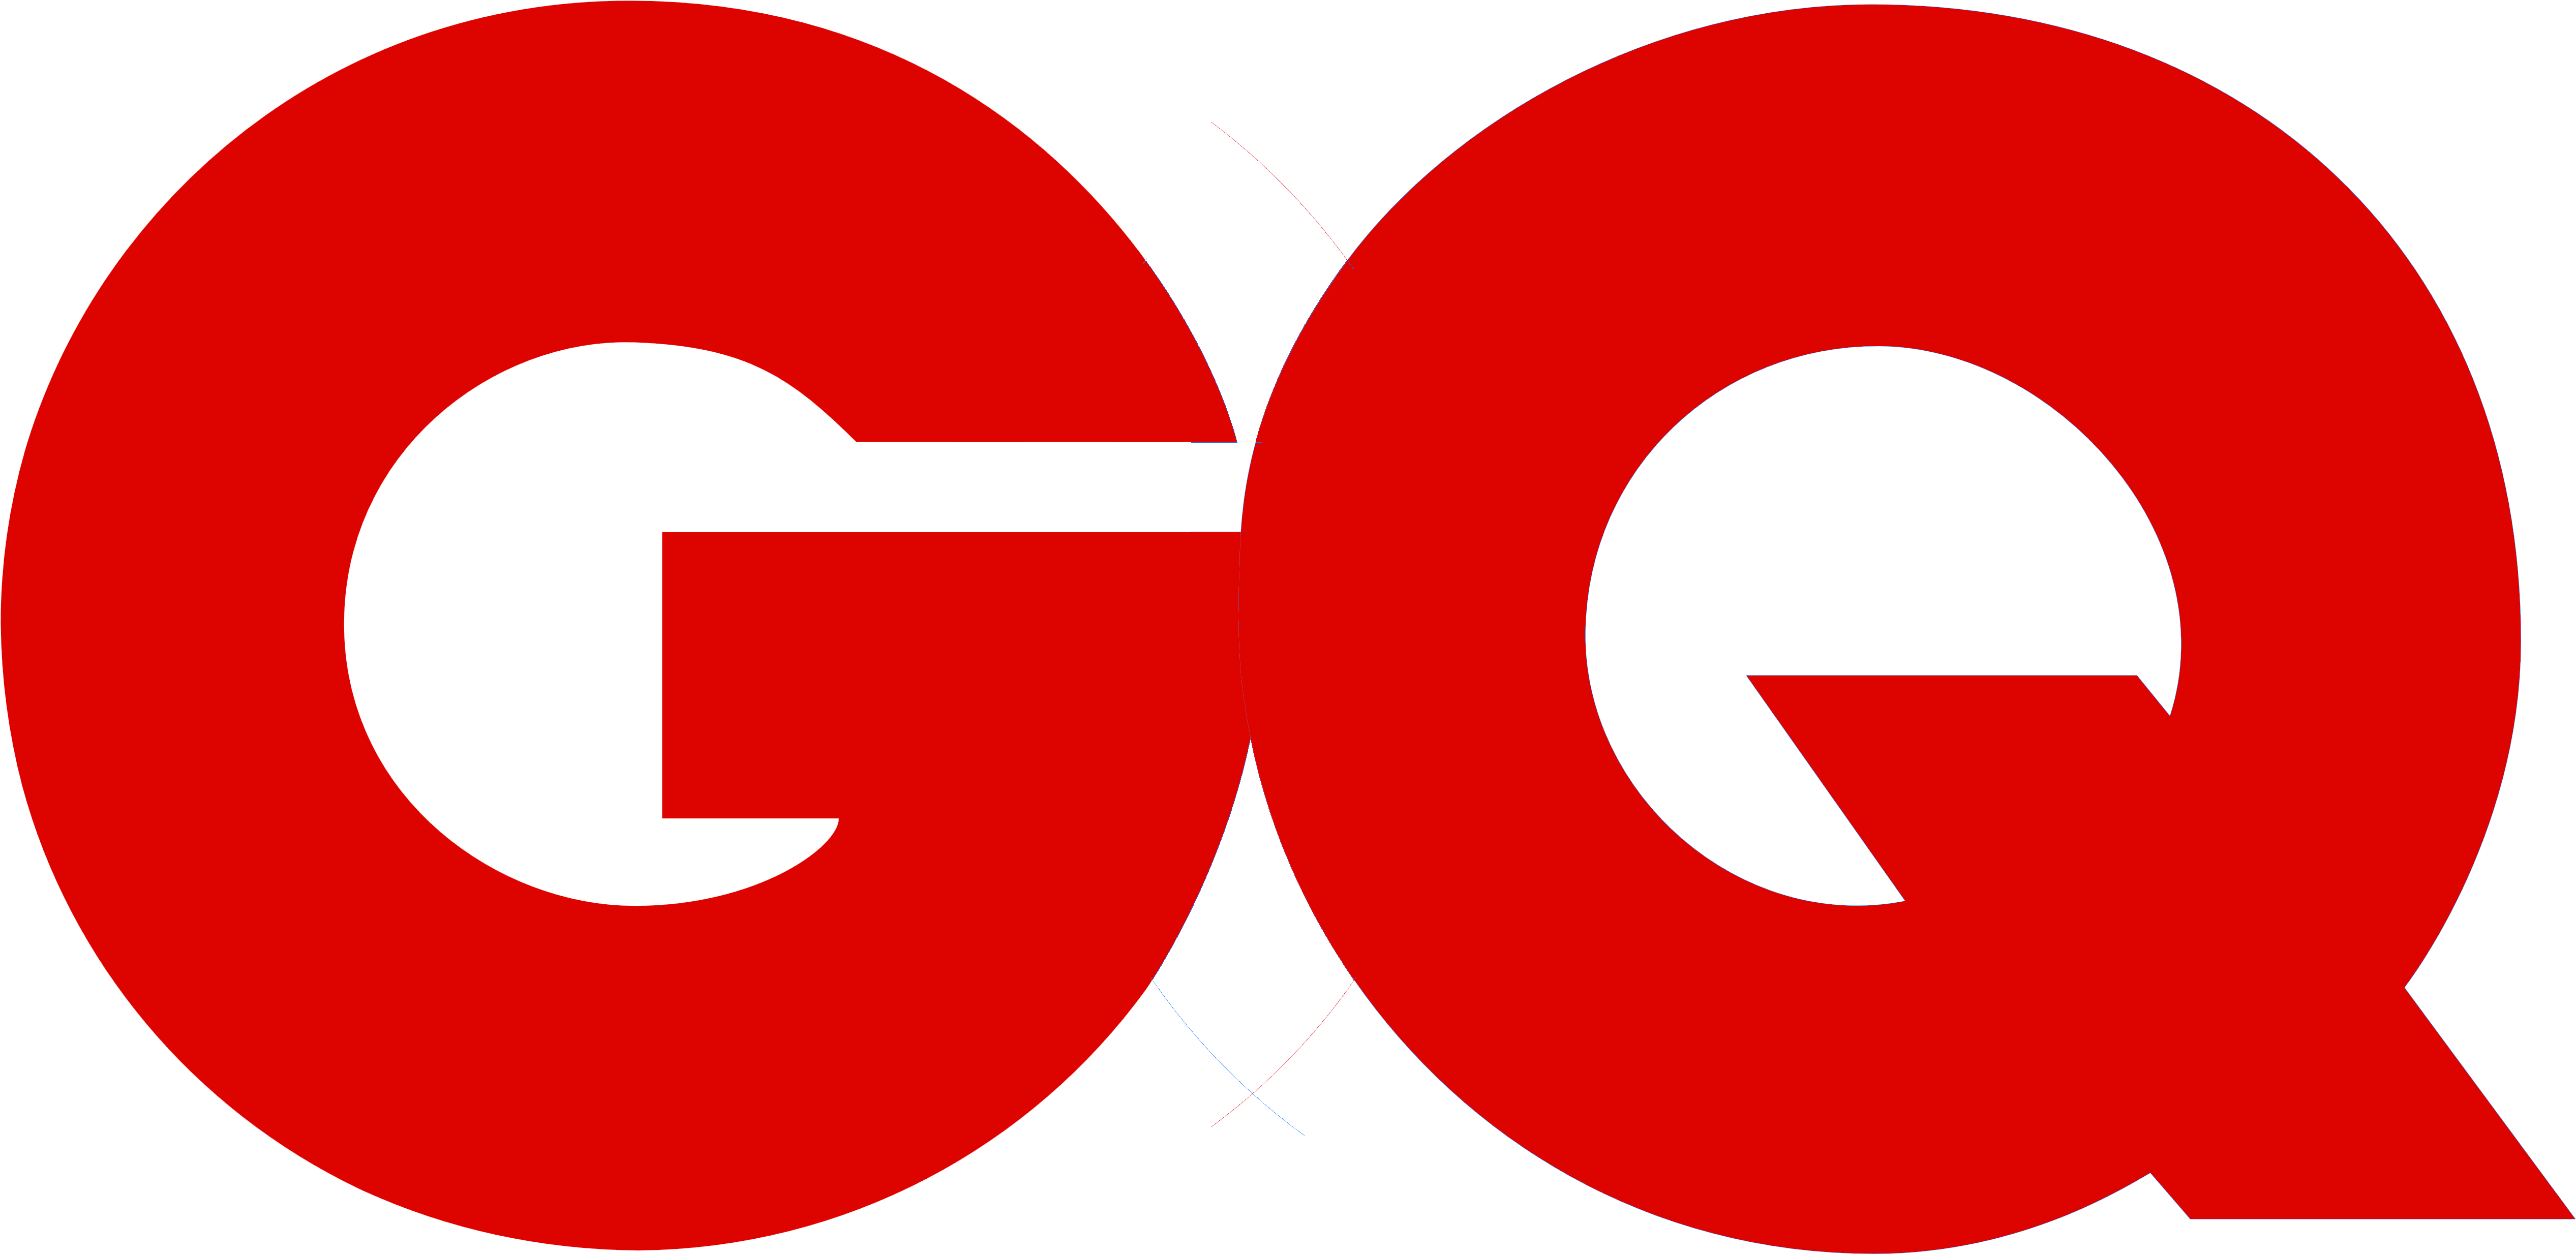 GQ UK Logo - Download Gq Logo Magazine, U.k. Version PNG Image with No